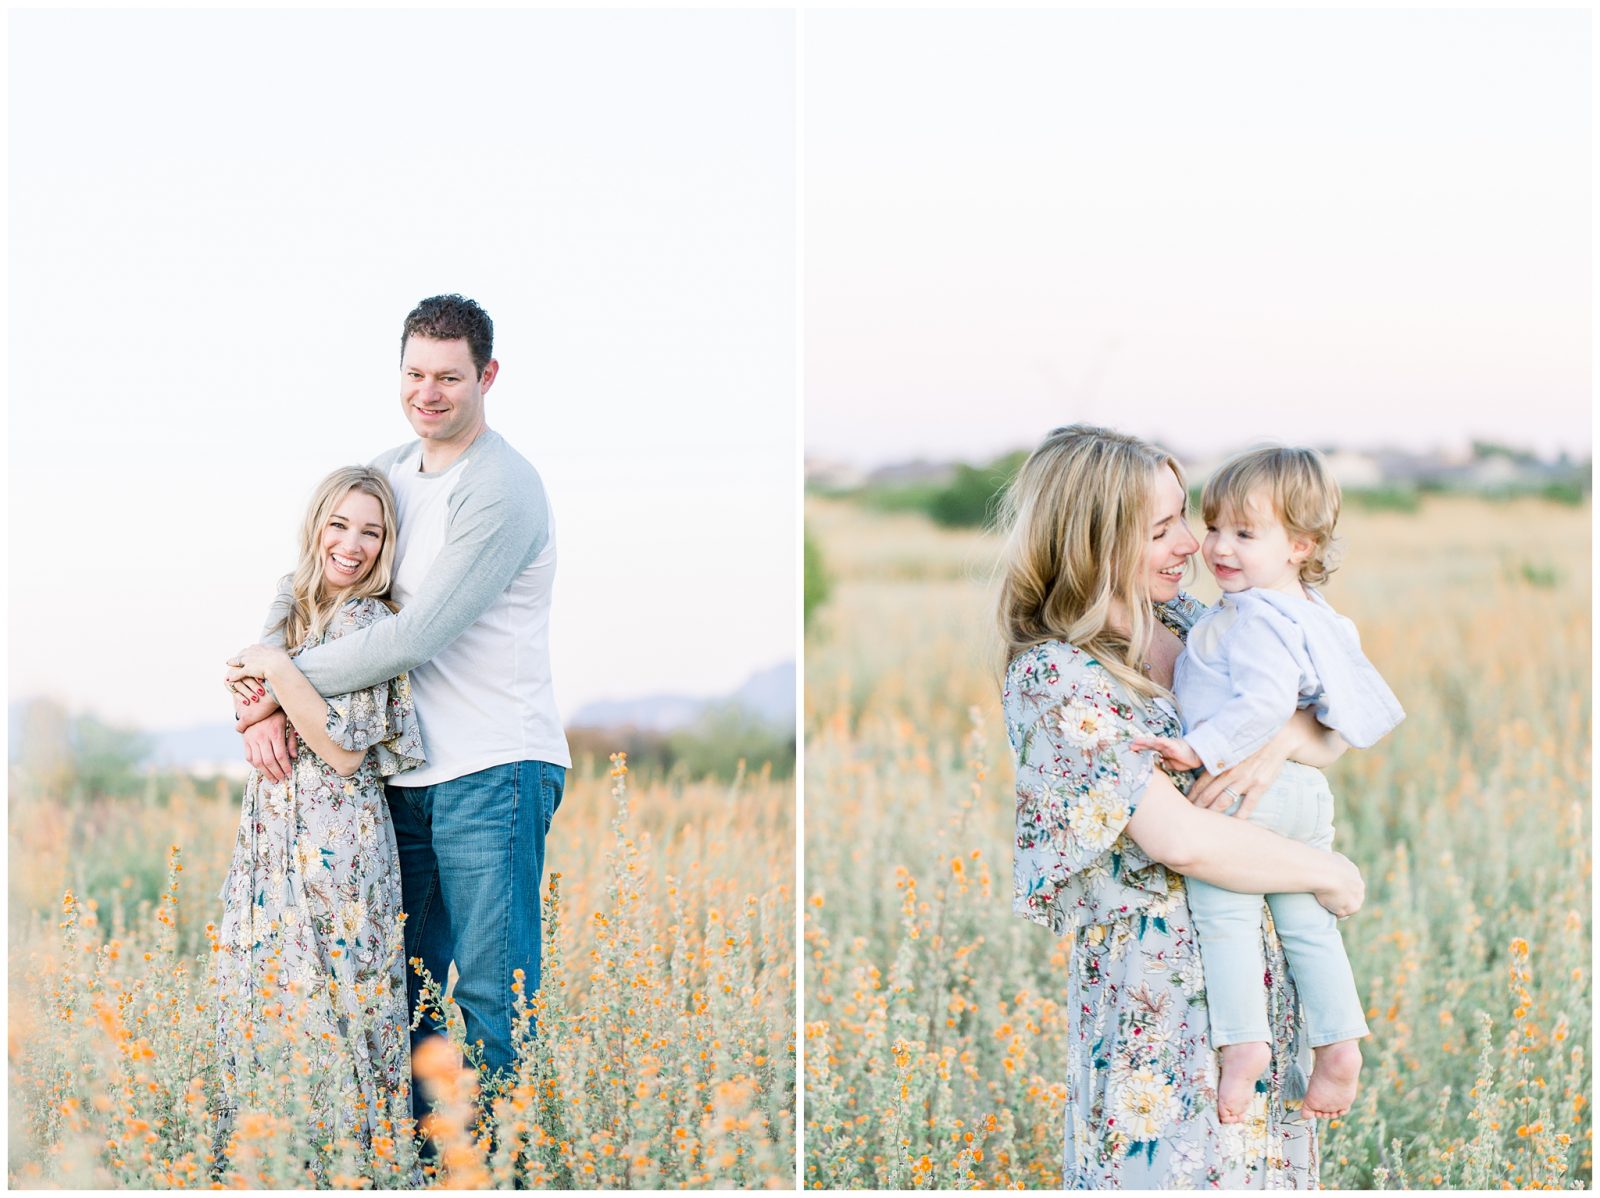 Aly-Kirk-Photo-Mesa-Arizona-Photographer-Family-Field-Flowers